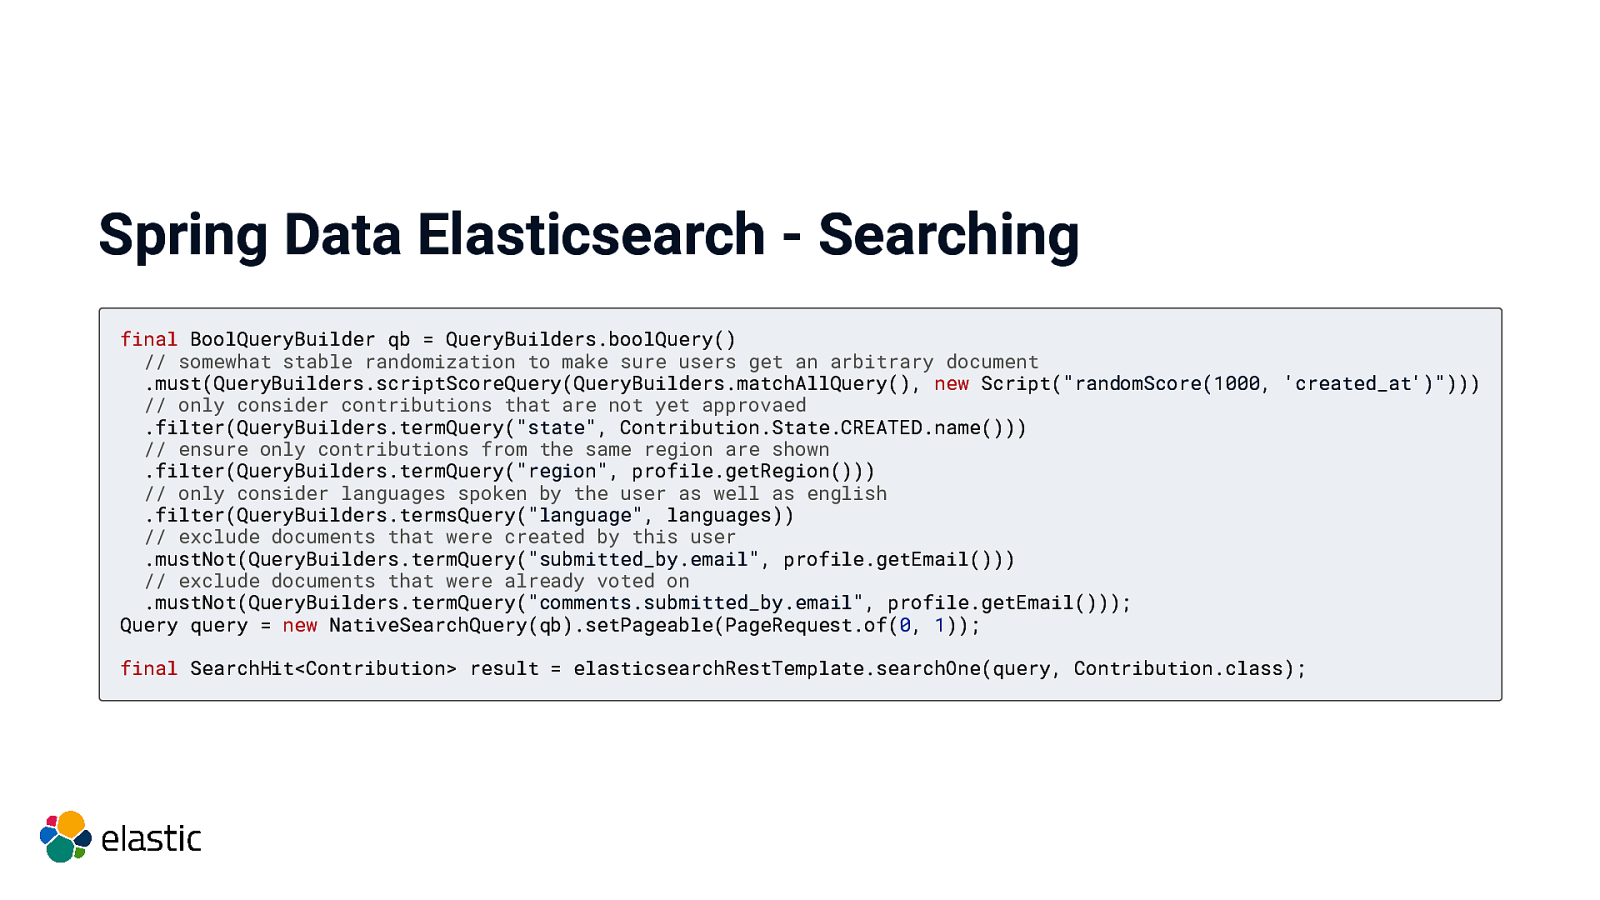 elasticsearch export all data